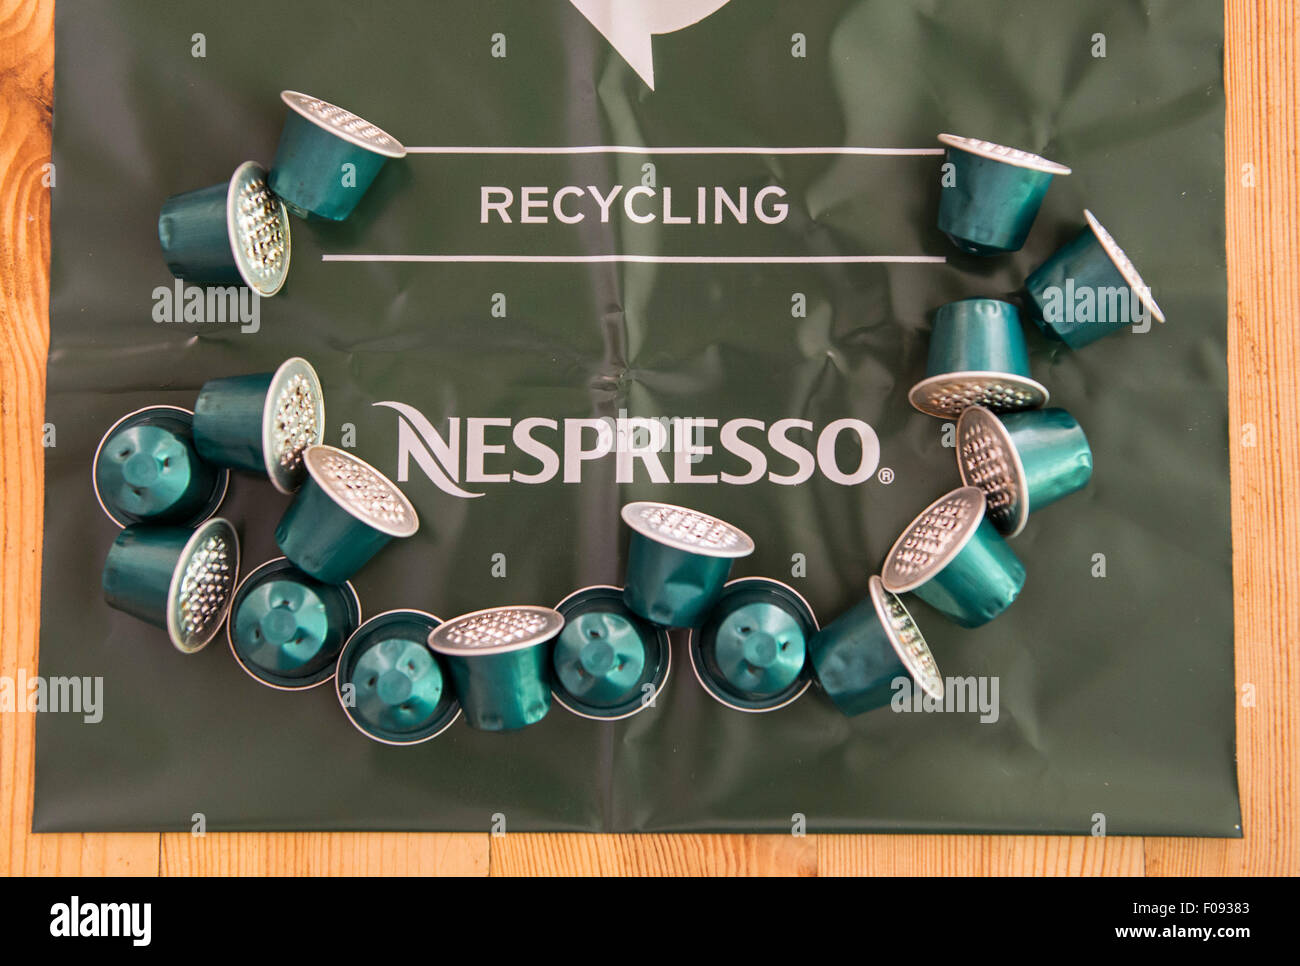 Nespresso cápsulas de café Nespresso en una bolsa de reciclaje